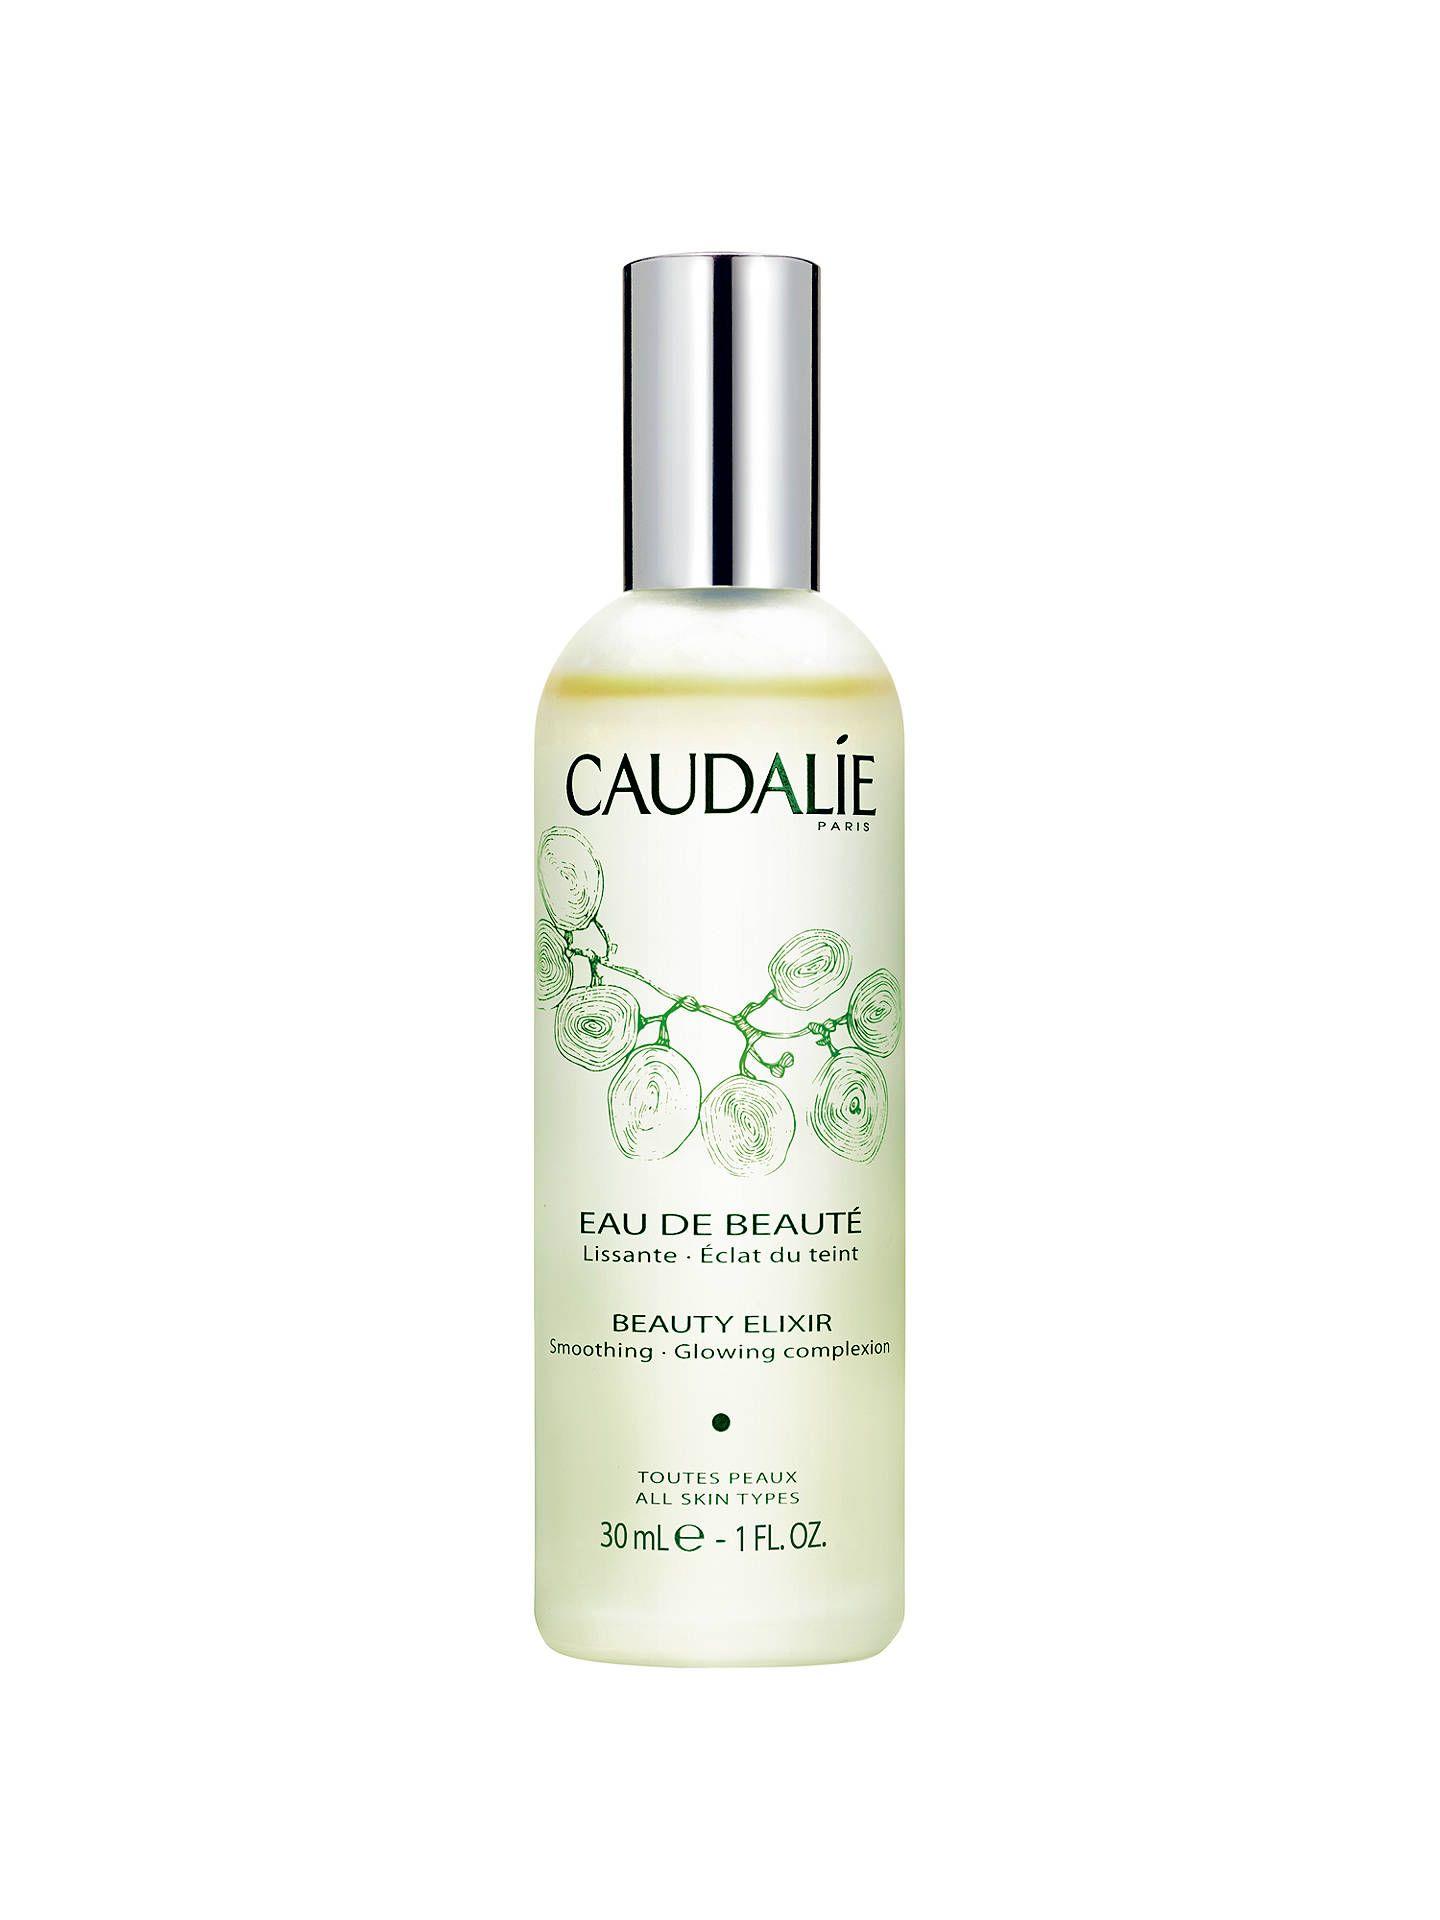 Caudalie Paris Logo - Caudalie Beauty Elixir, 30ml at John Lewis & Partners